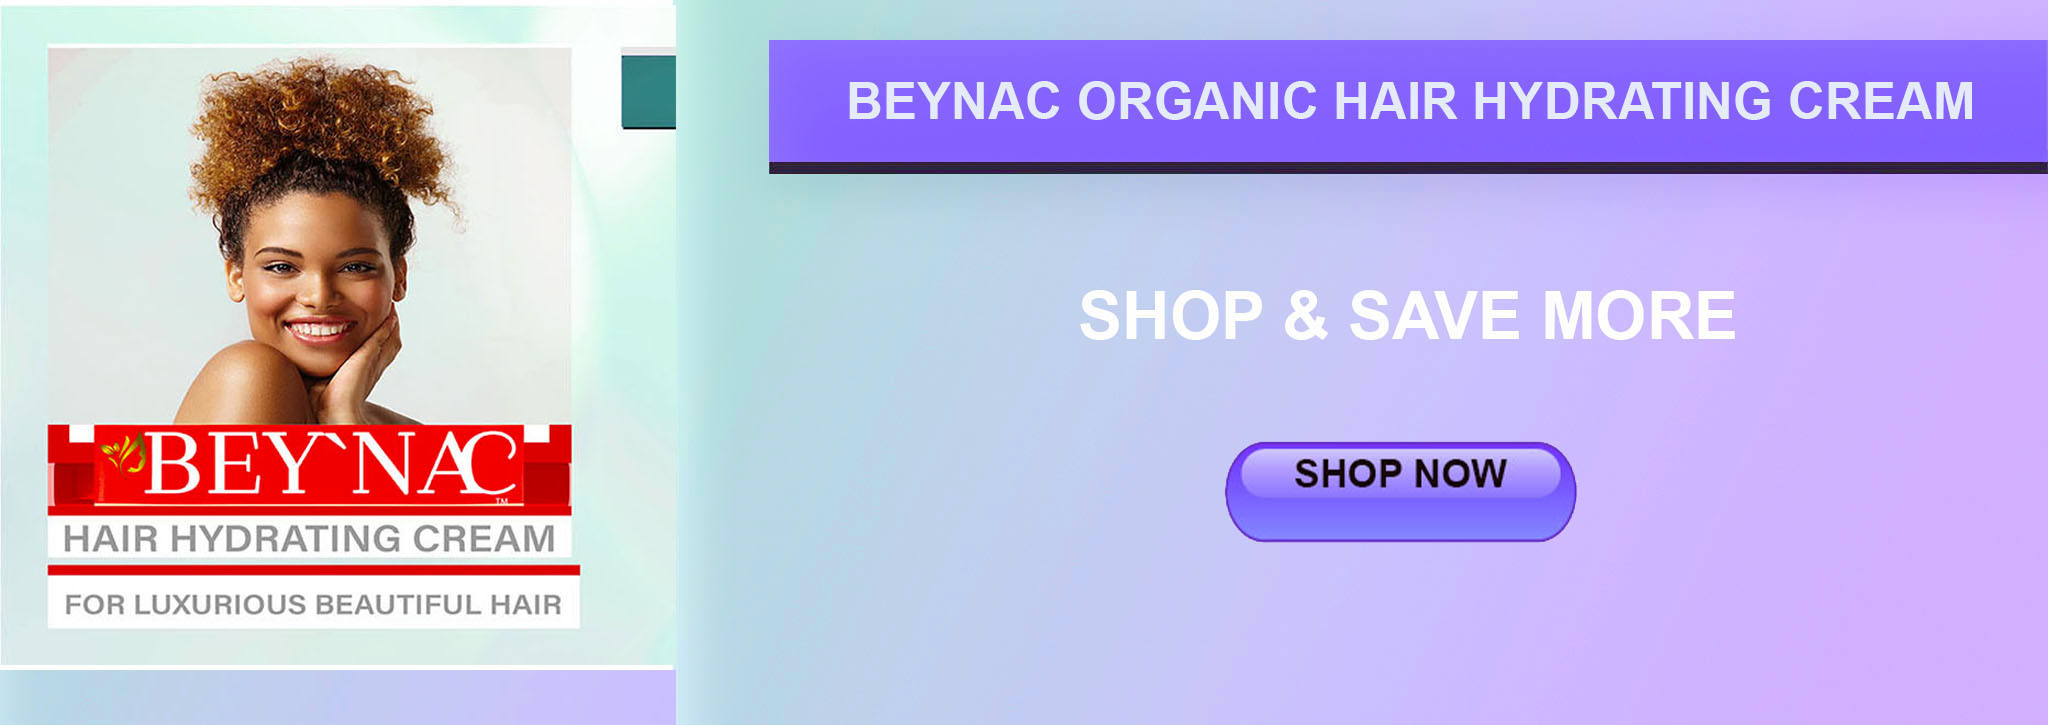 beynac_organic_hair_hydrating_cream-all1d.jpg